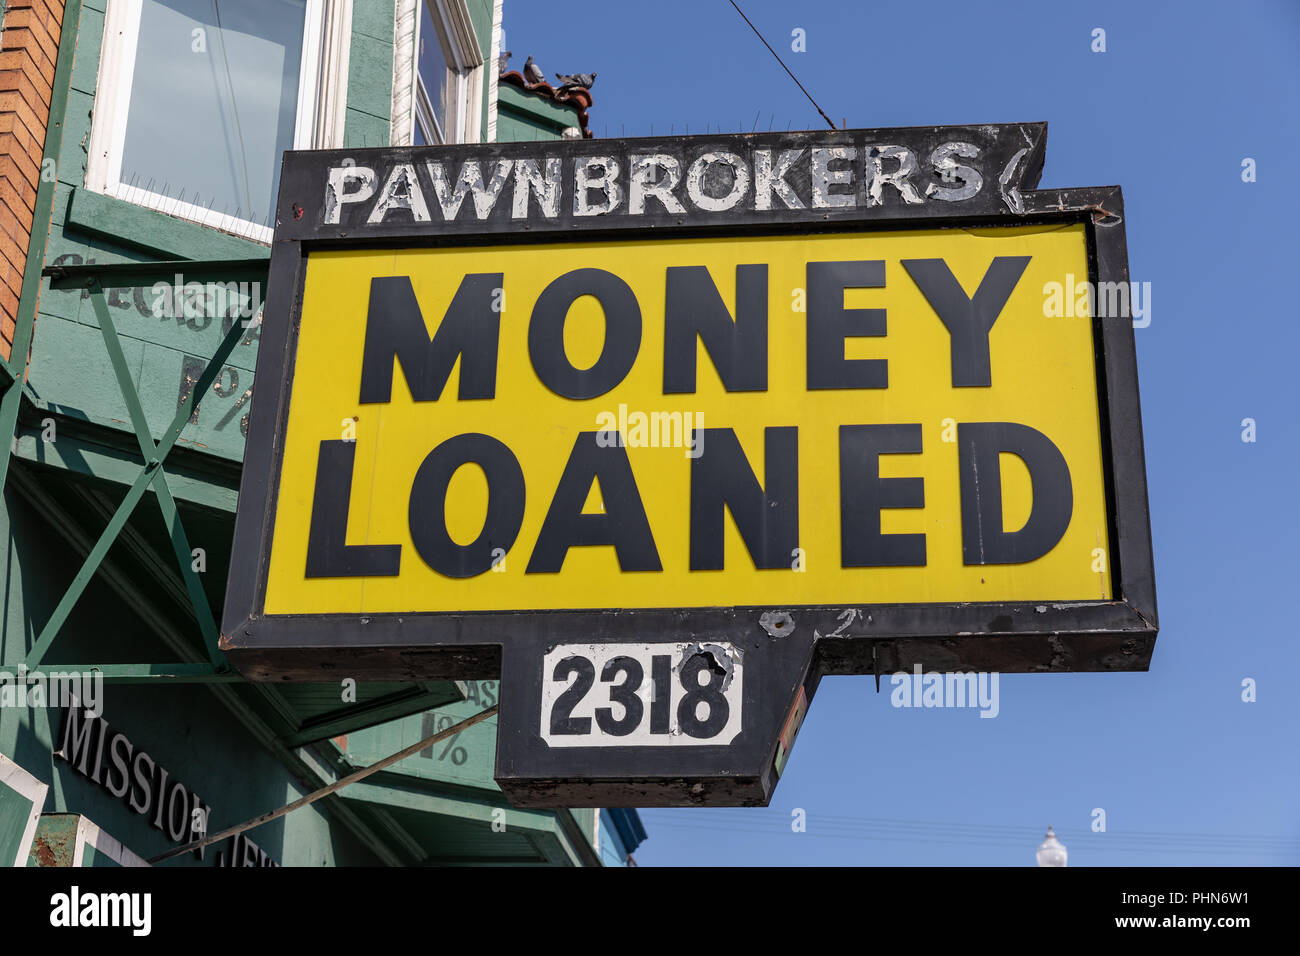 Pawnbrokers – Money Loaned sign; Mission Street, San Francisco, California Stock Photo